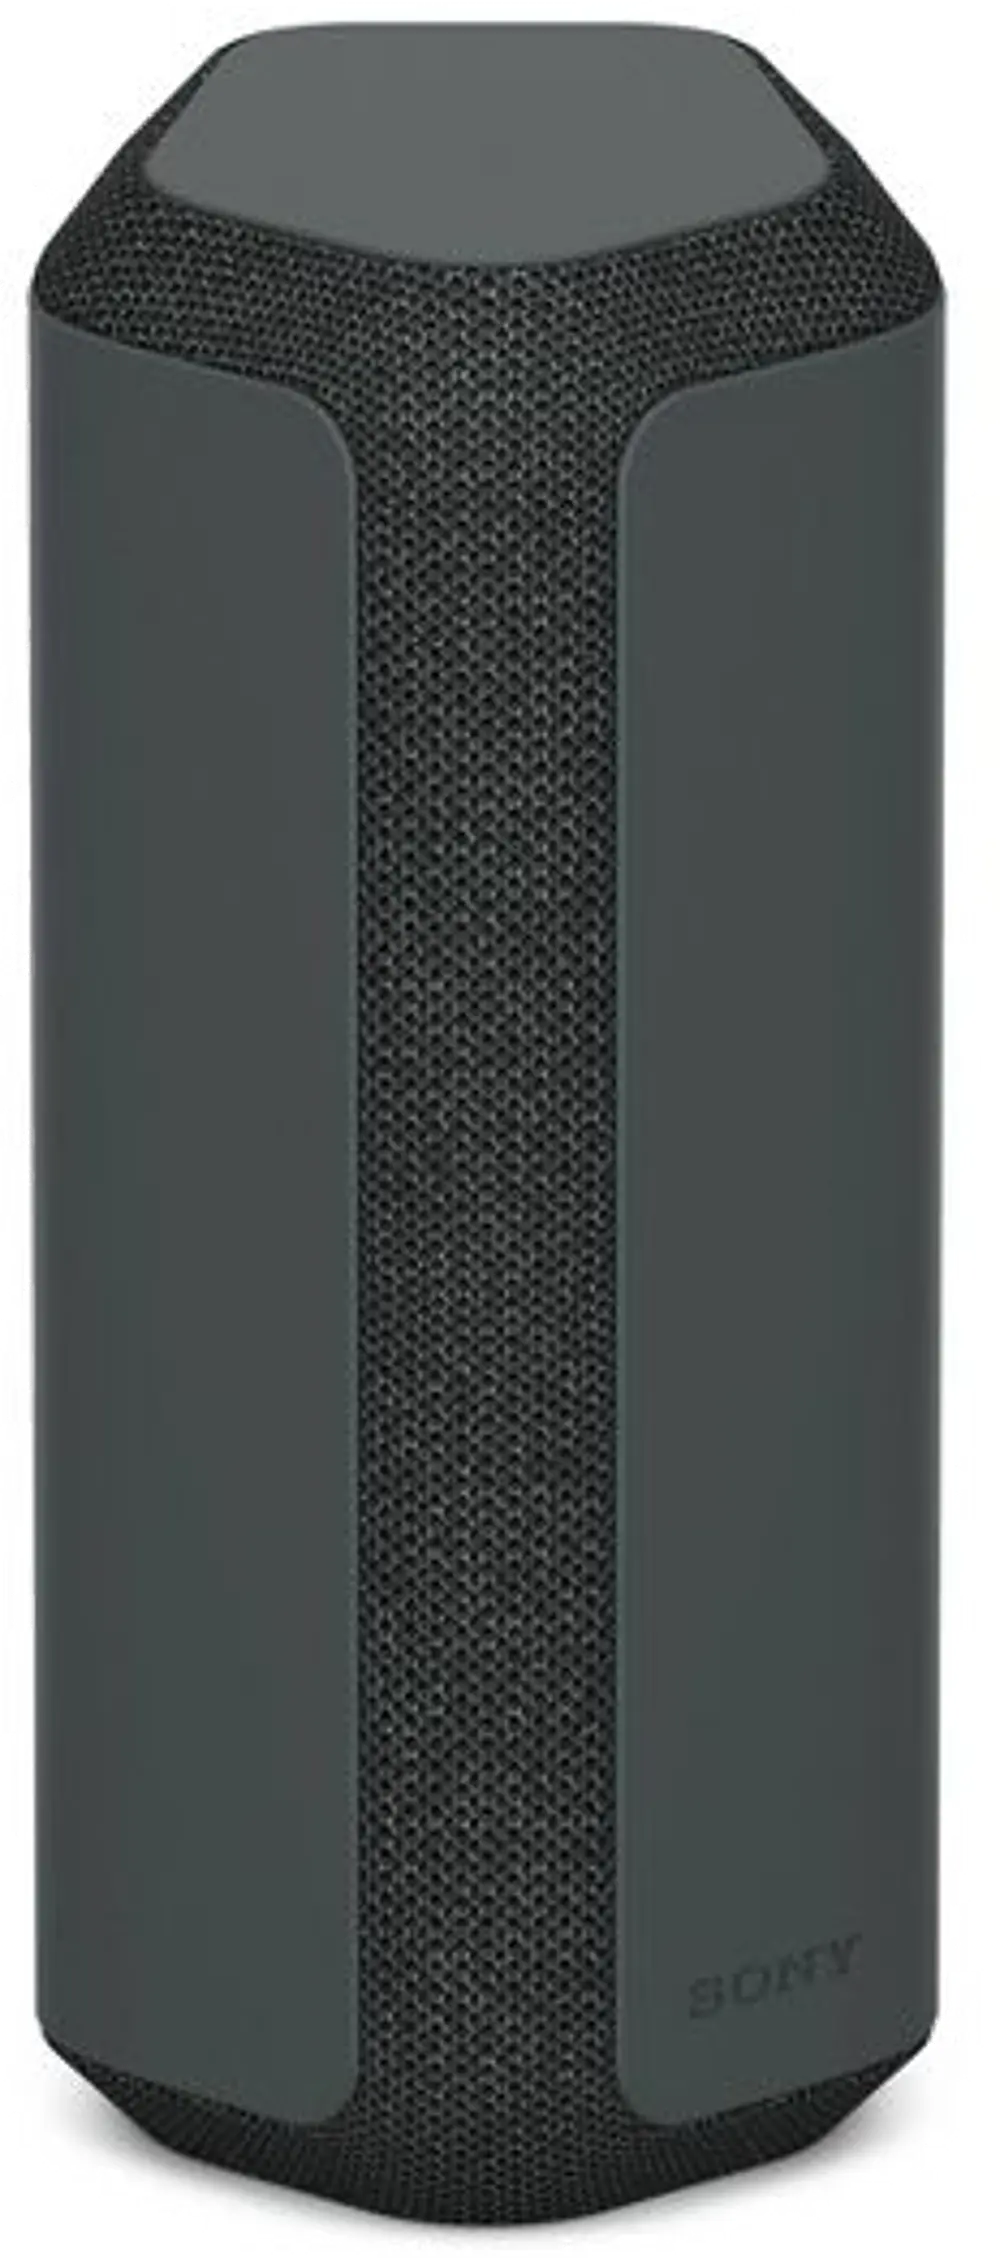 SRSXE300/B BLACK Sony SRSXE300 Portable X-Series Bluetooth Speaker - Black-1